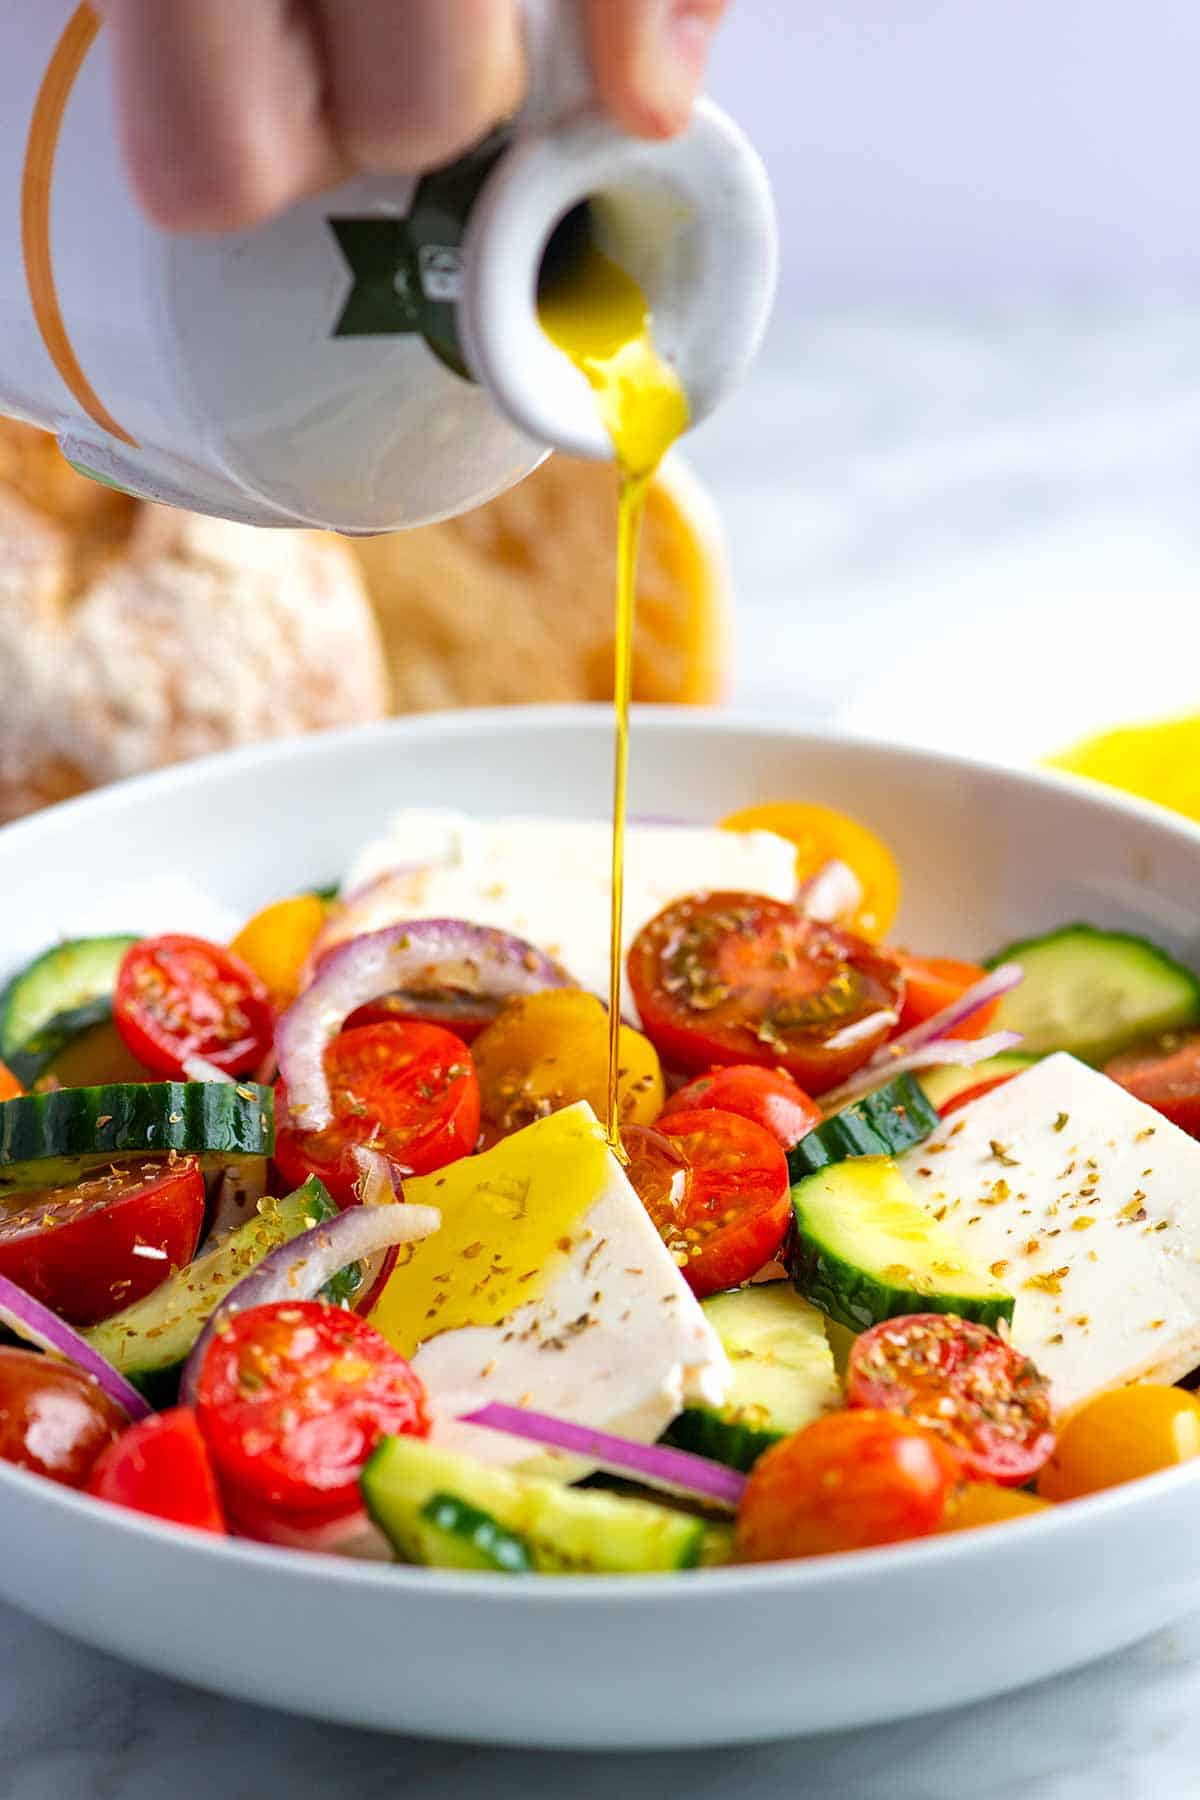 Olive oil being poured over a Greek salad.